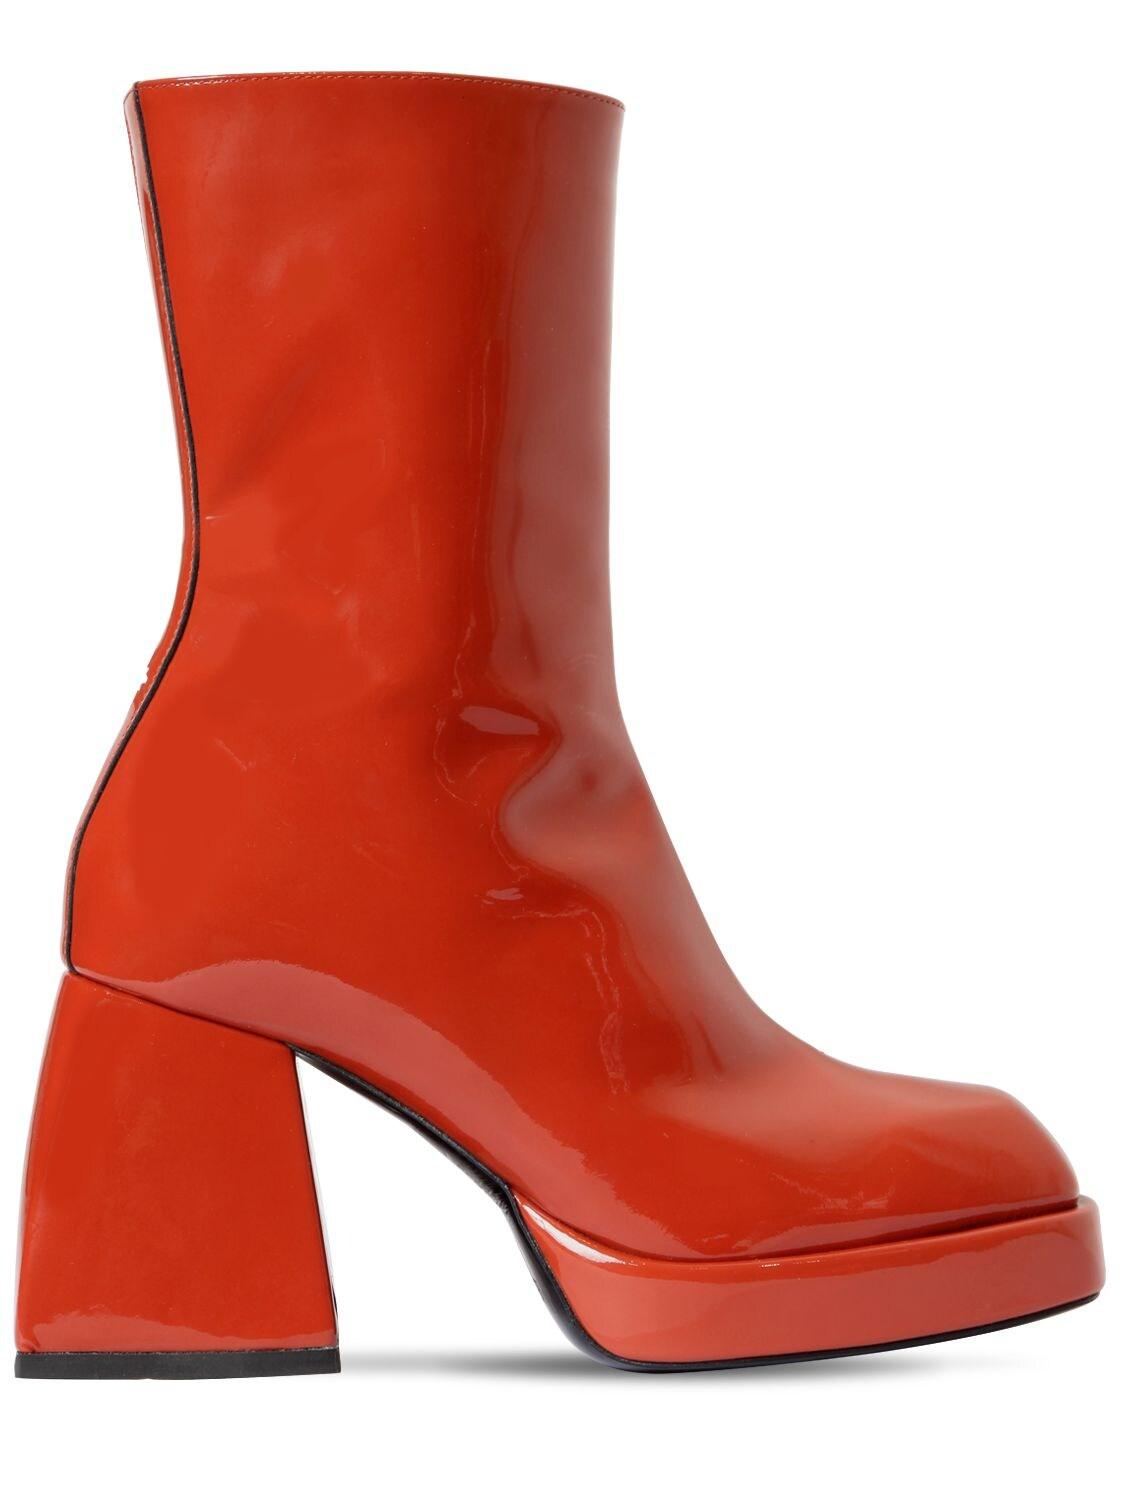 NODALETO 85mm Bulla Corta Patent Leather Boots in Orange | Lyst